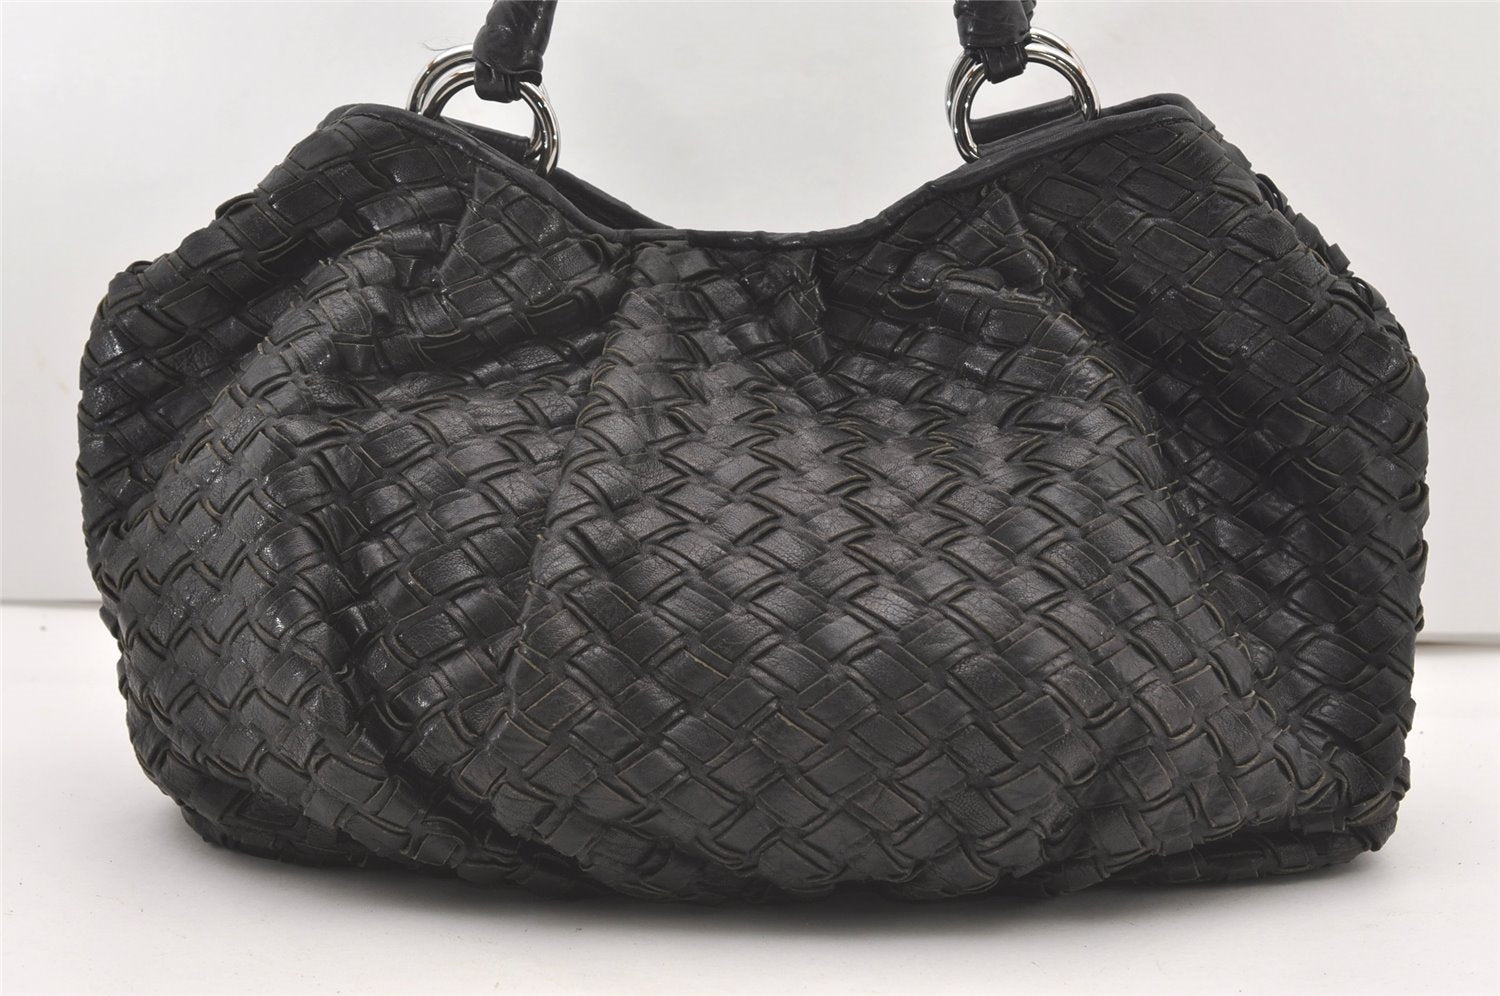 Authentic MIU MIU Vintage Leather Shoulder Tote Bag Black 2299J